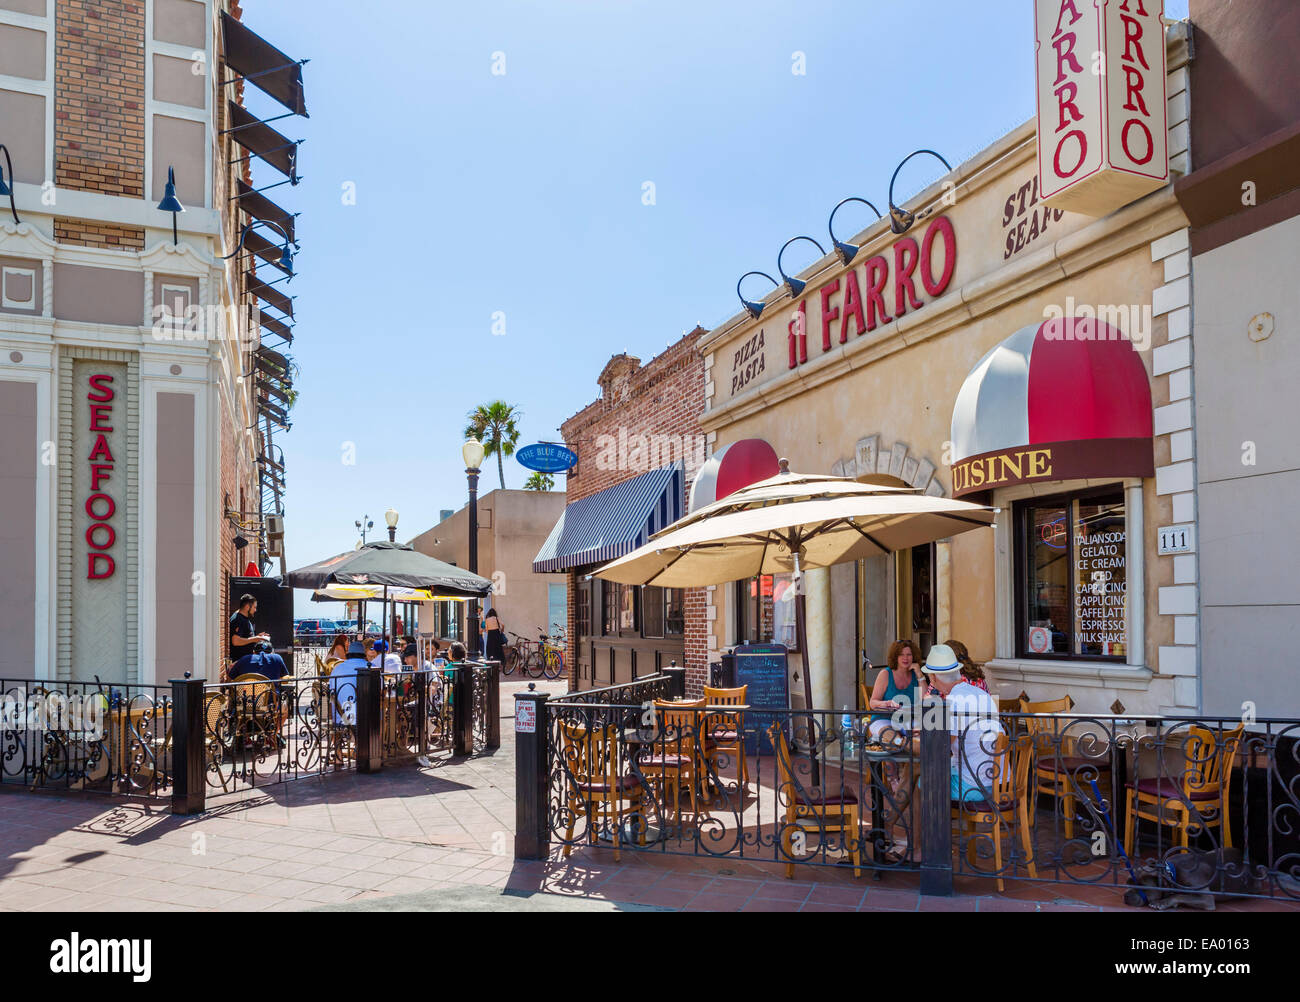 Bars and restaurants on 21st Place, Balboa Peninsula, Newport Beach, Orange County, California, USA Stock Photo